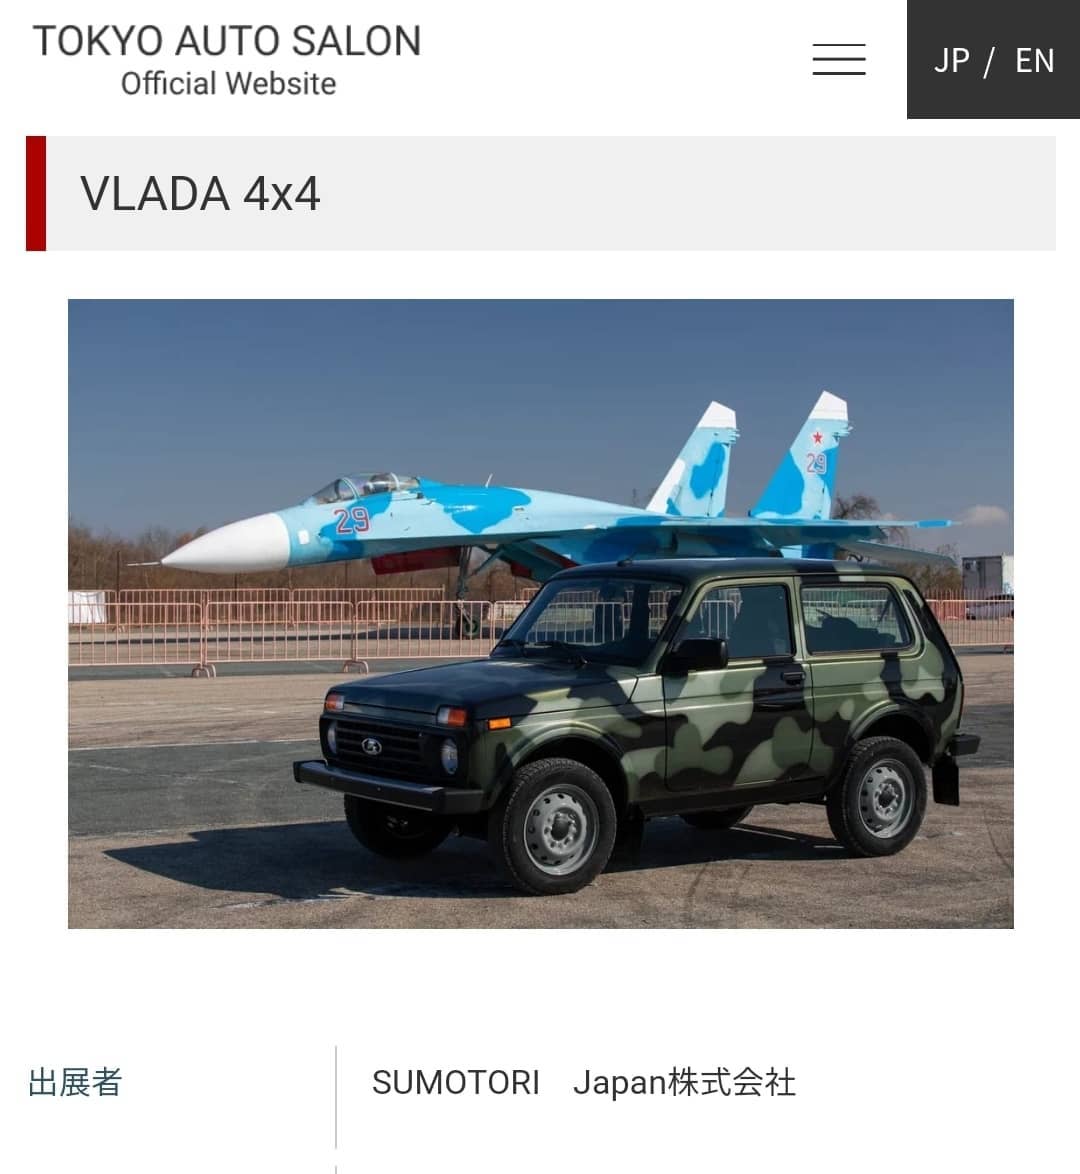 Спецверсию LADA Niva под названием VLADA покажут на автосалоне в Токио в 2022 году